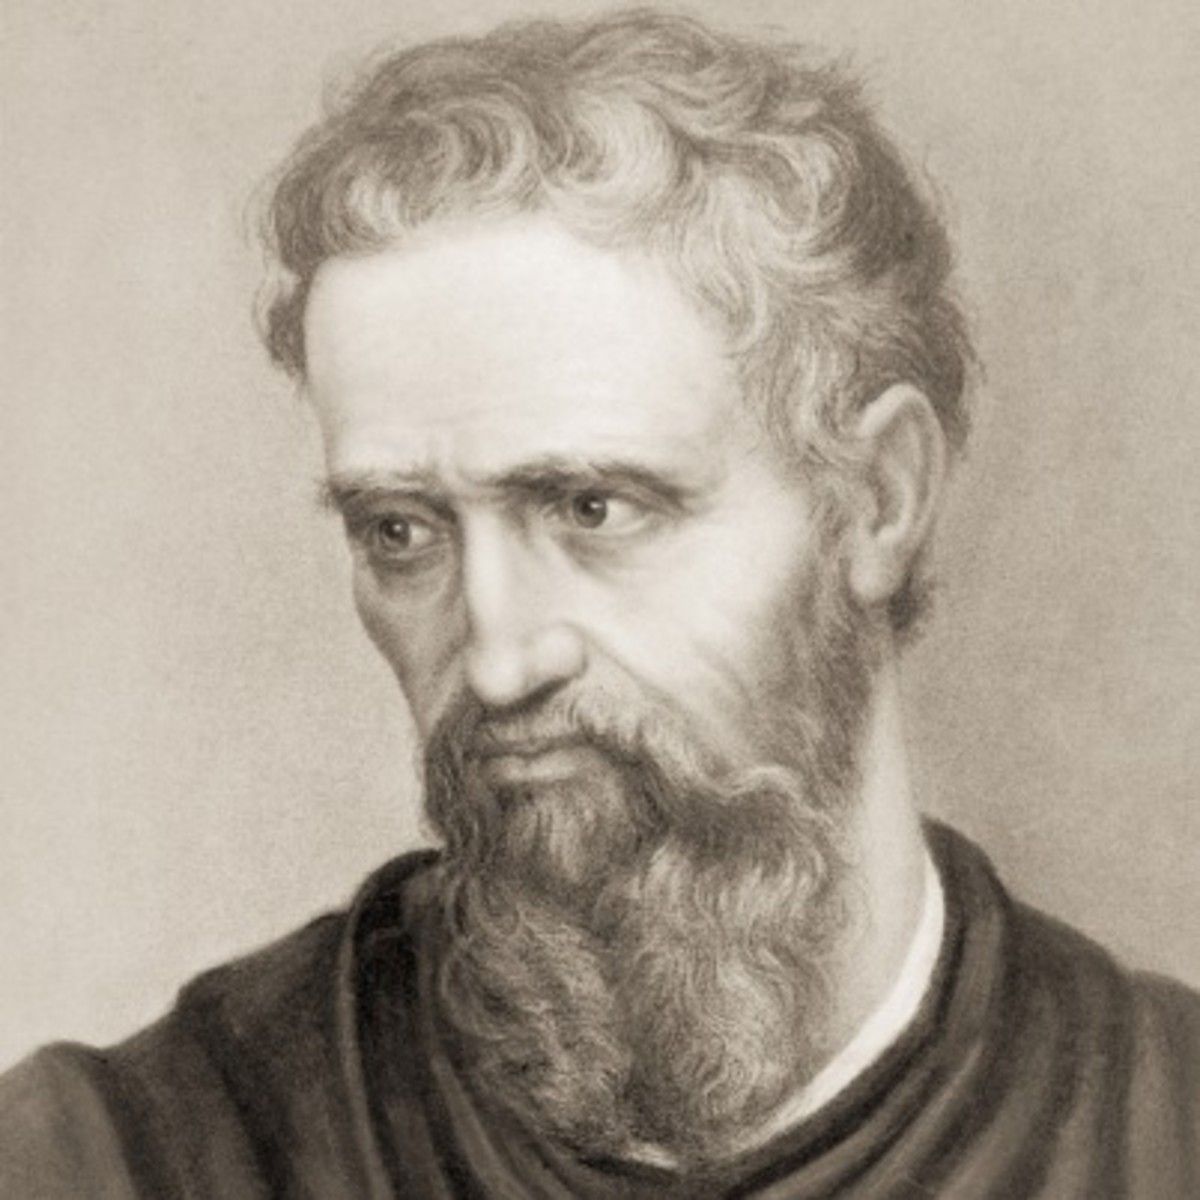 Michelangelo di Lodovico Buonarroti Simoni